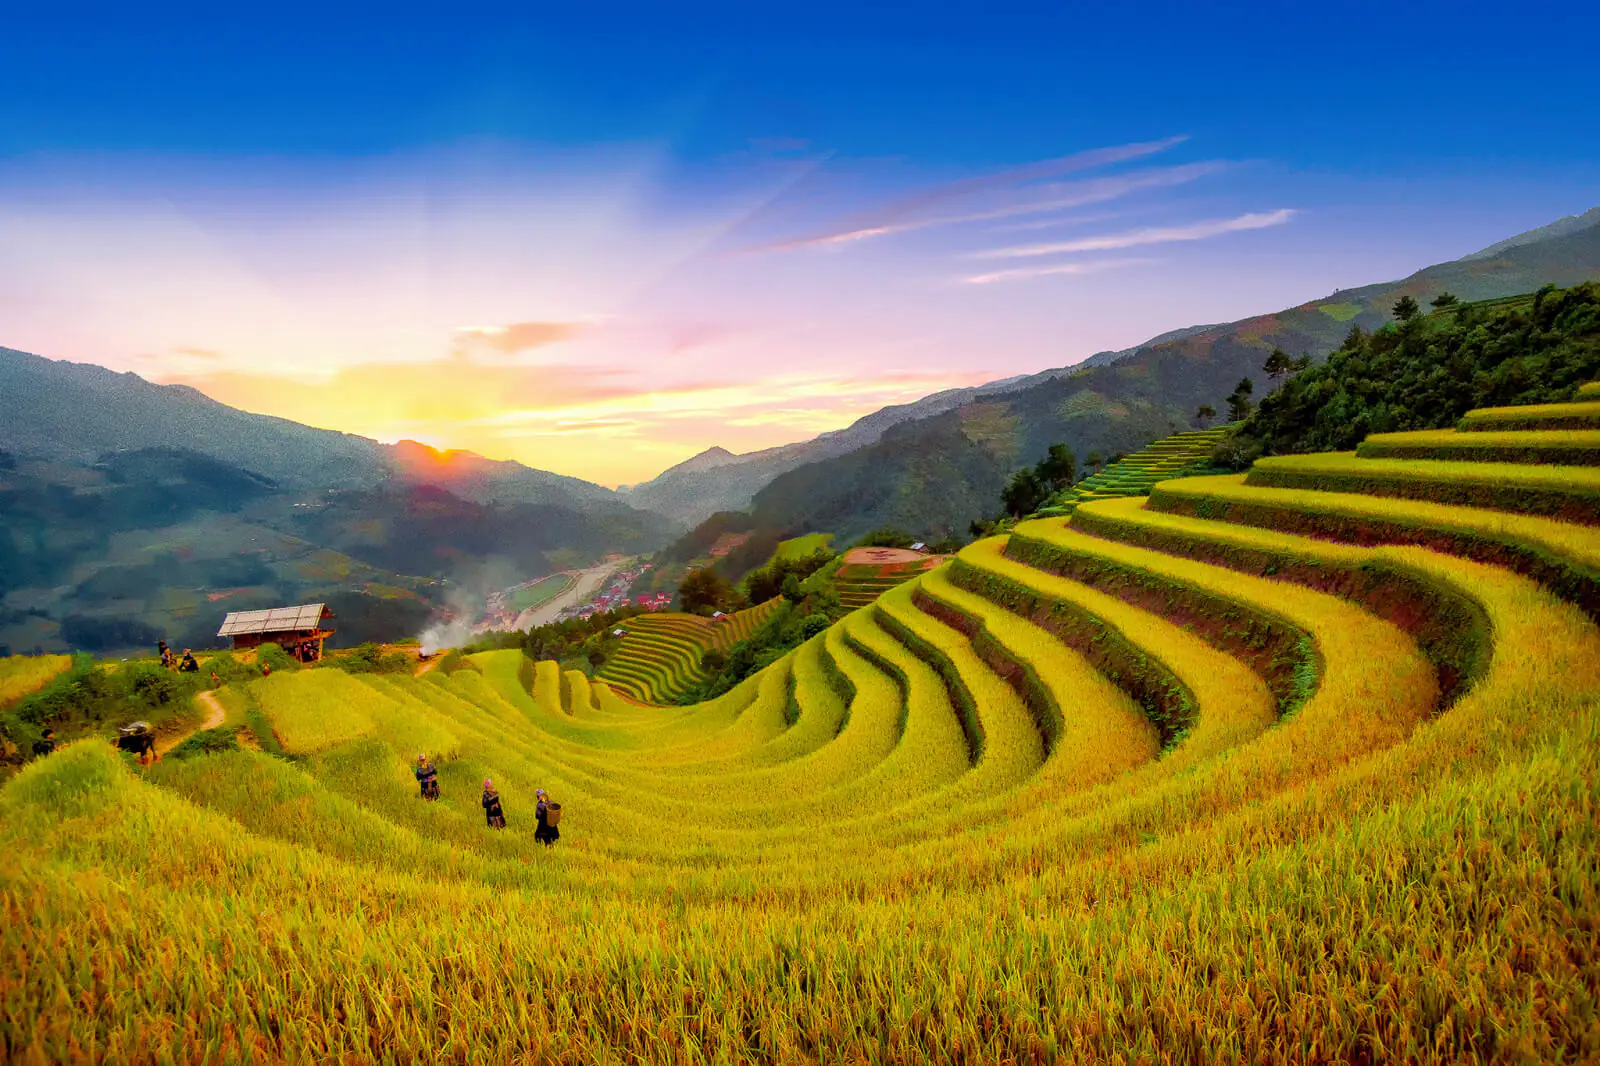 Mu Cang Chai Vietnam: The Top 10 Most Beautiful Destinations